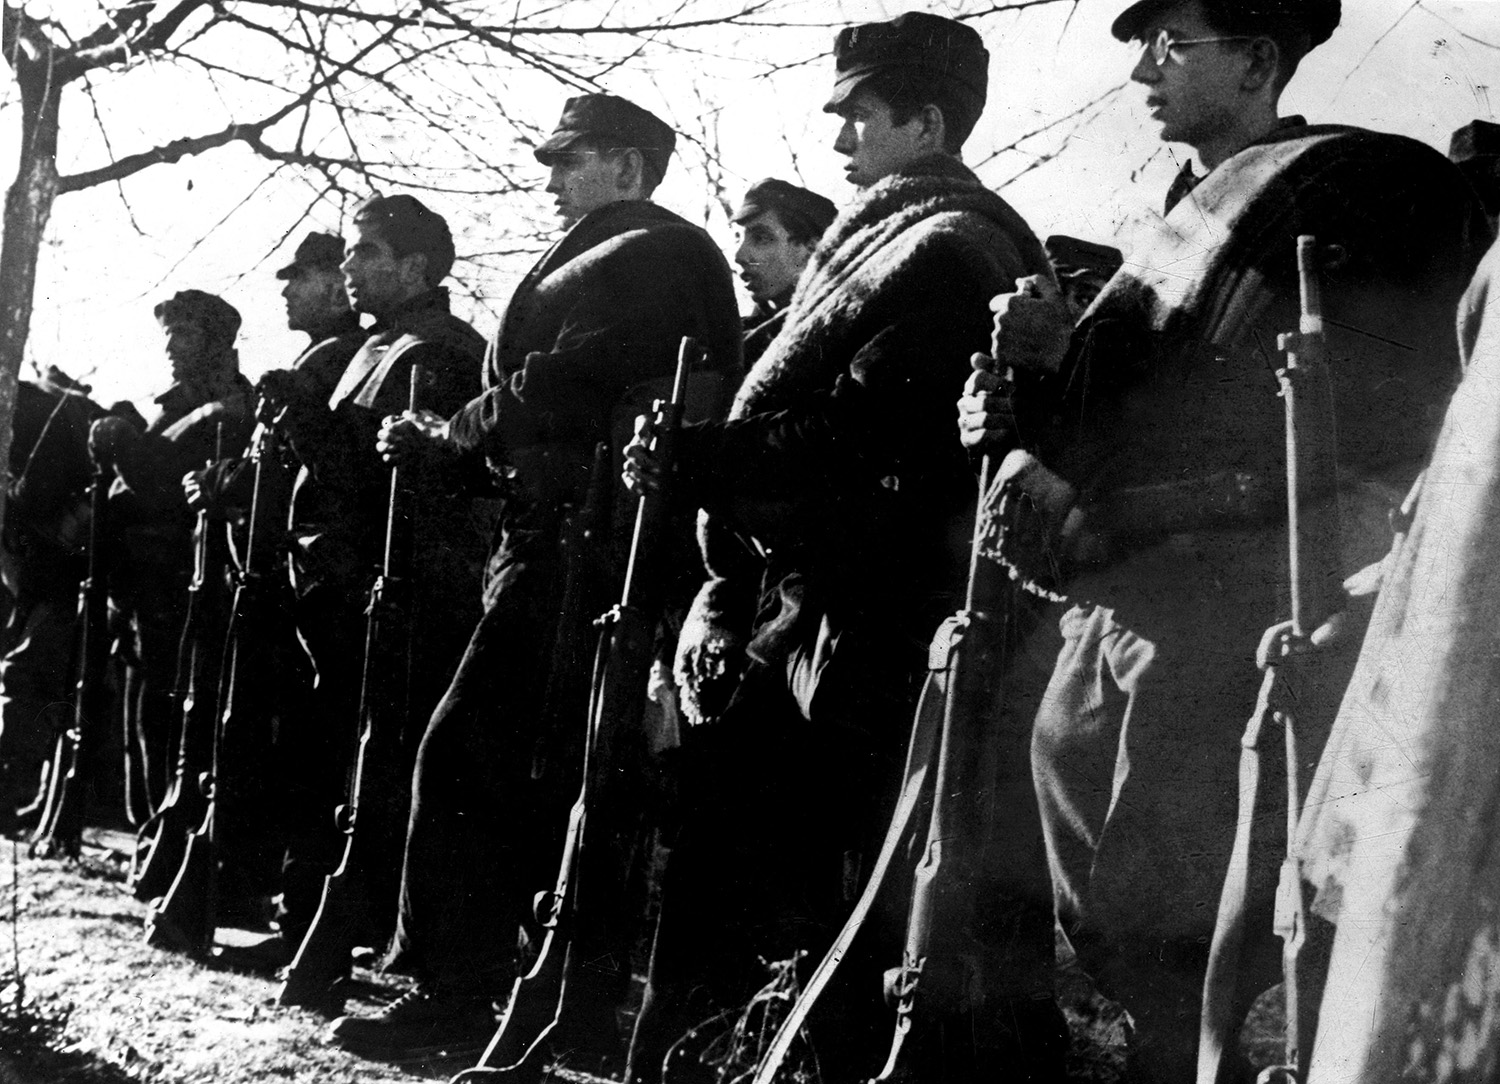 Battalion of an International Brigade, Spain, 1937.